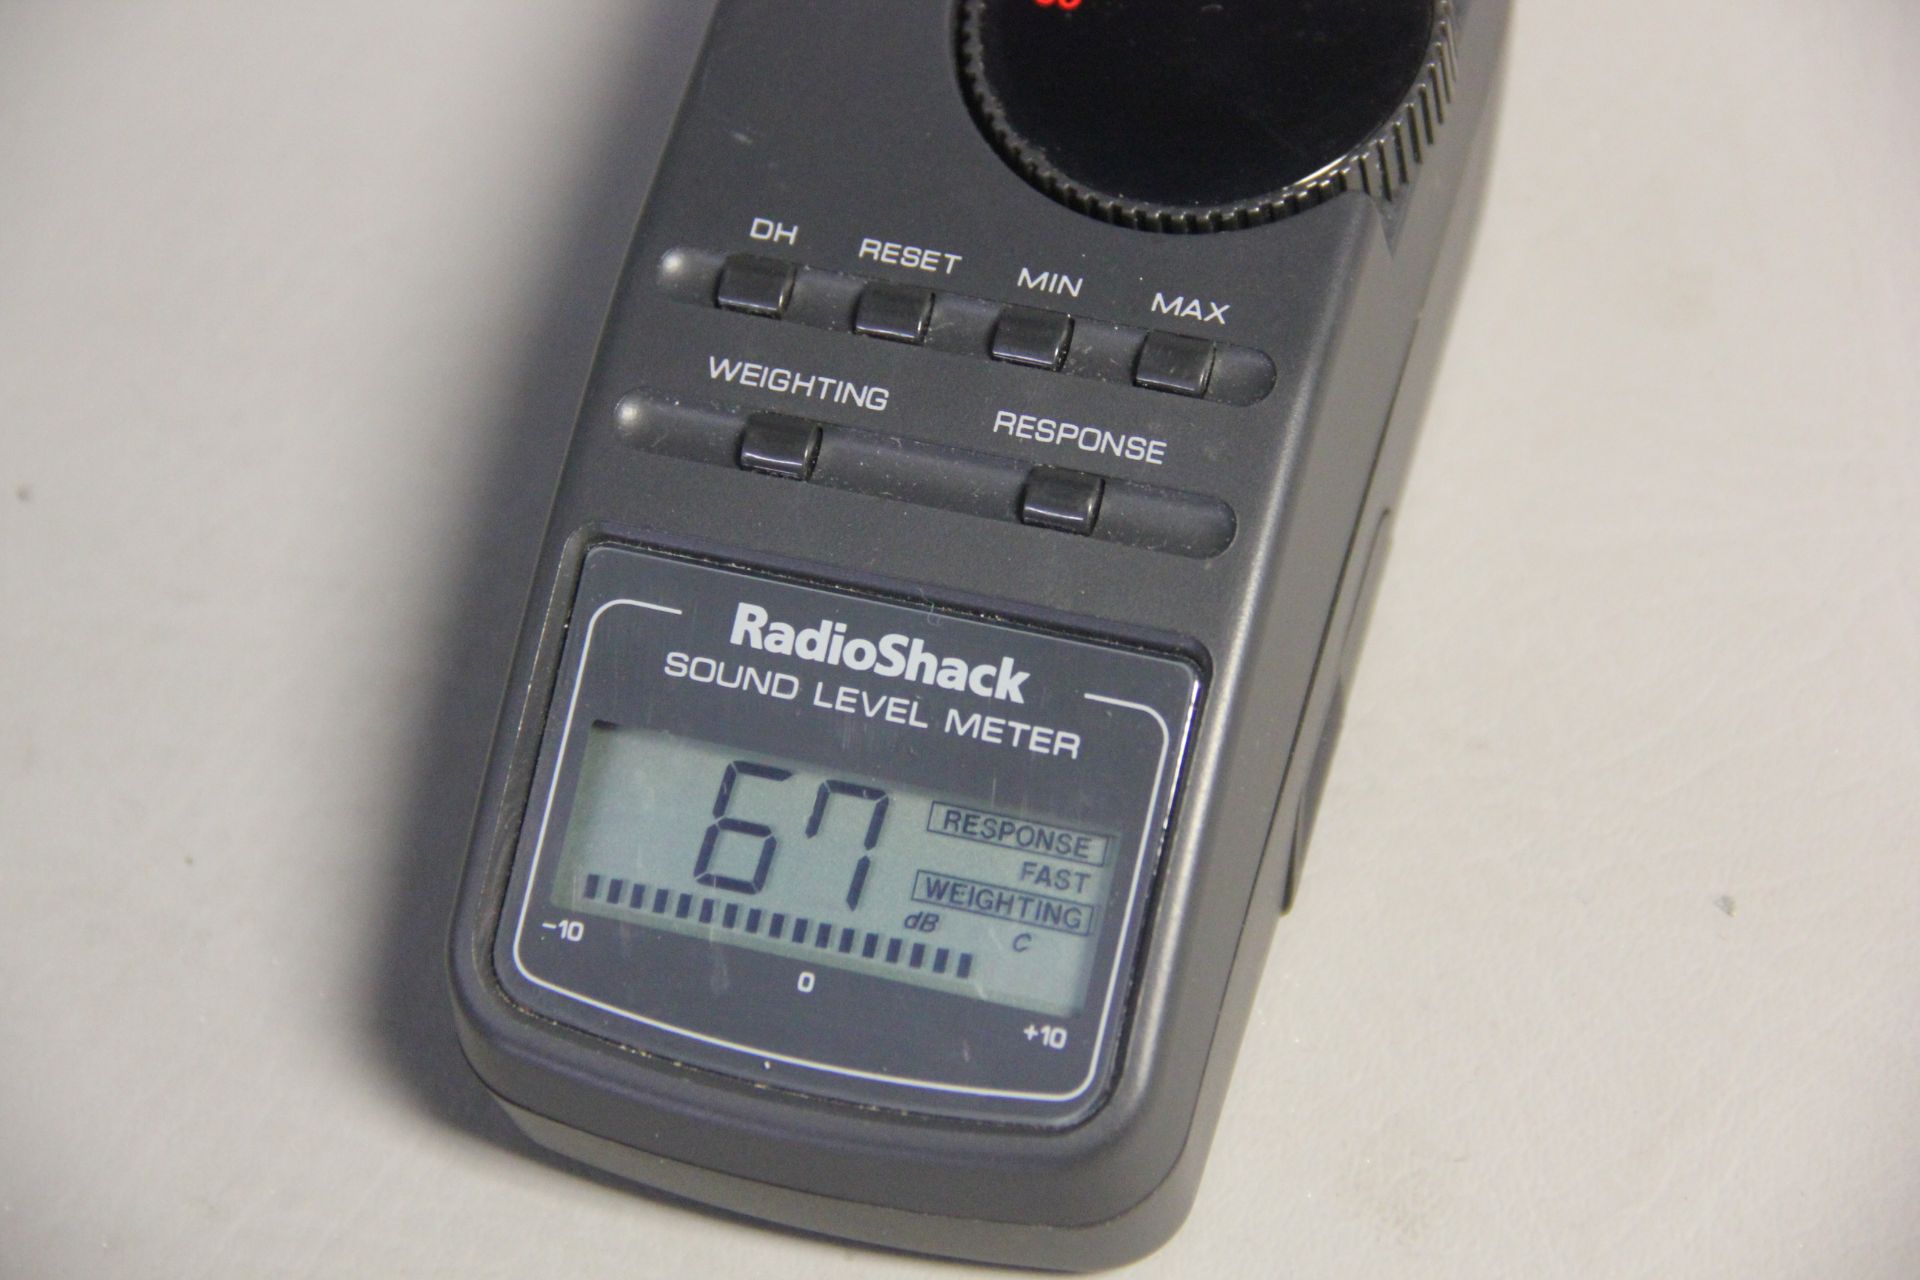 RADIO SHACK SOUND LEVEL METER - Image 5 of 5